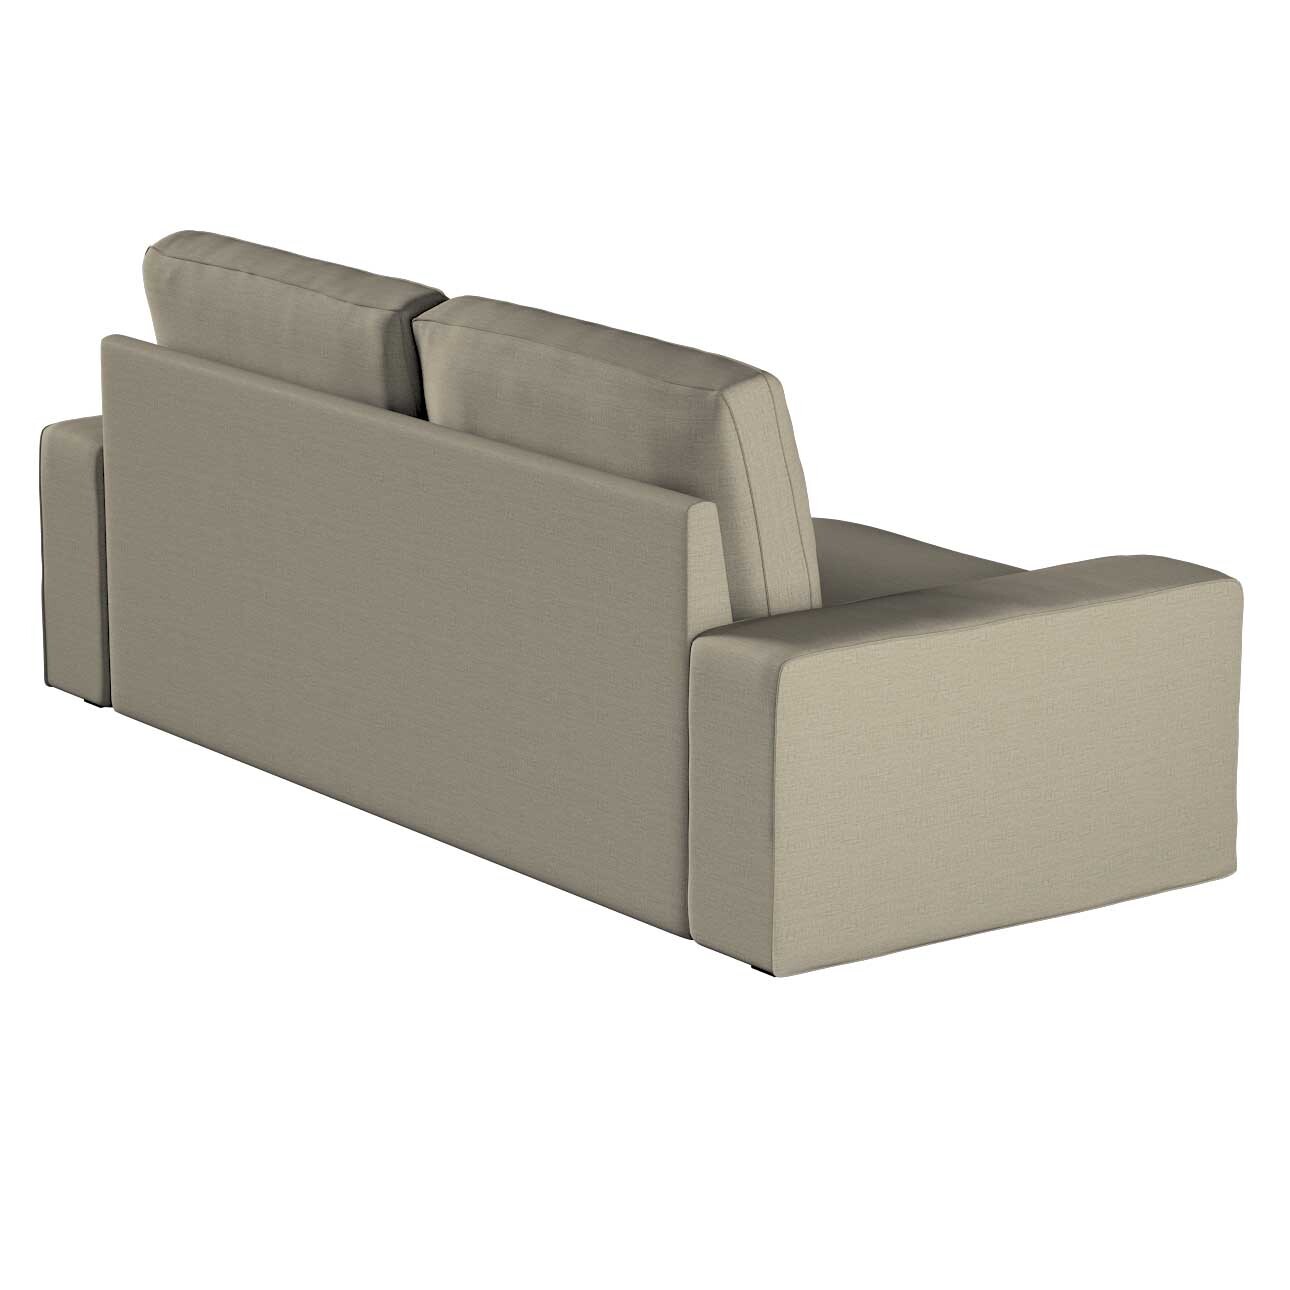 Bezug für Kivik 3-Sitzer Sofa, beige-grau, Bezug für Sofa Kivik 3-Sitzer, L günstig online kaufen